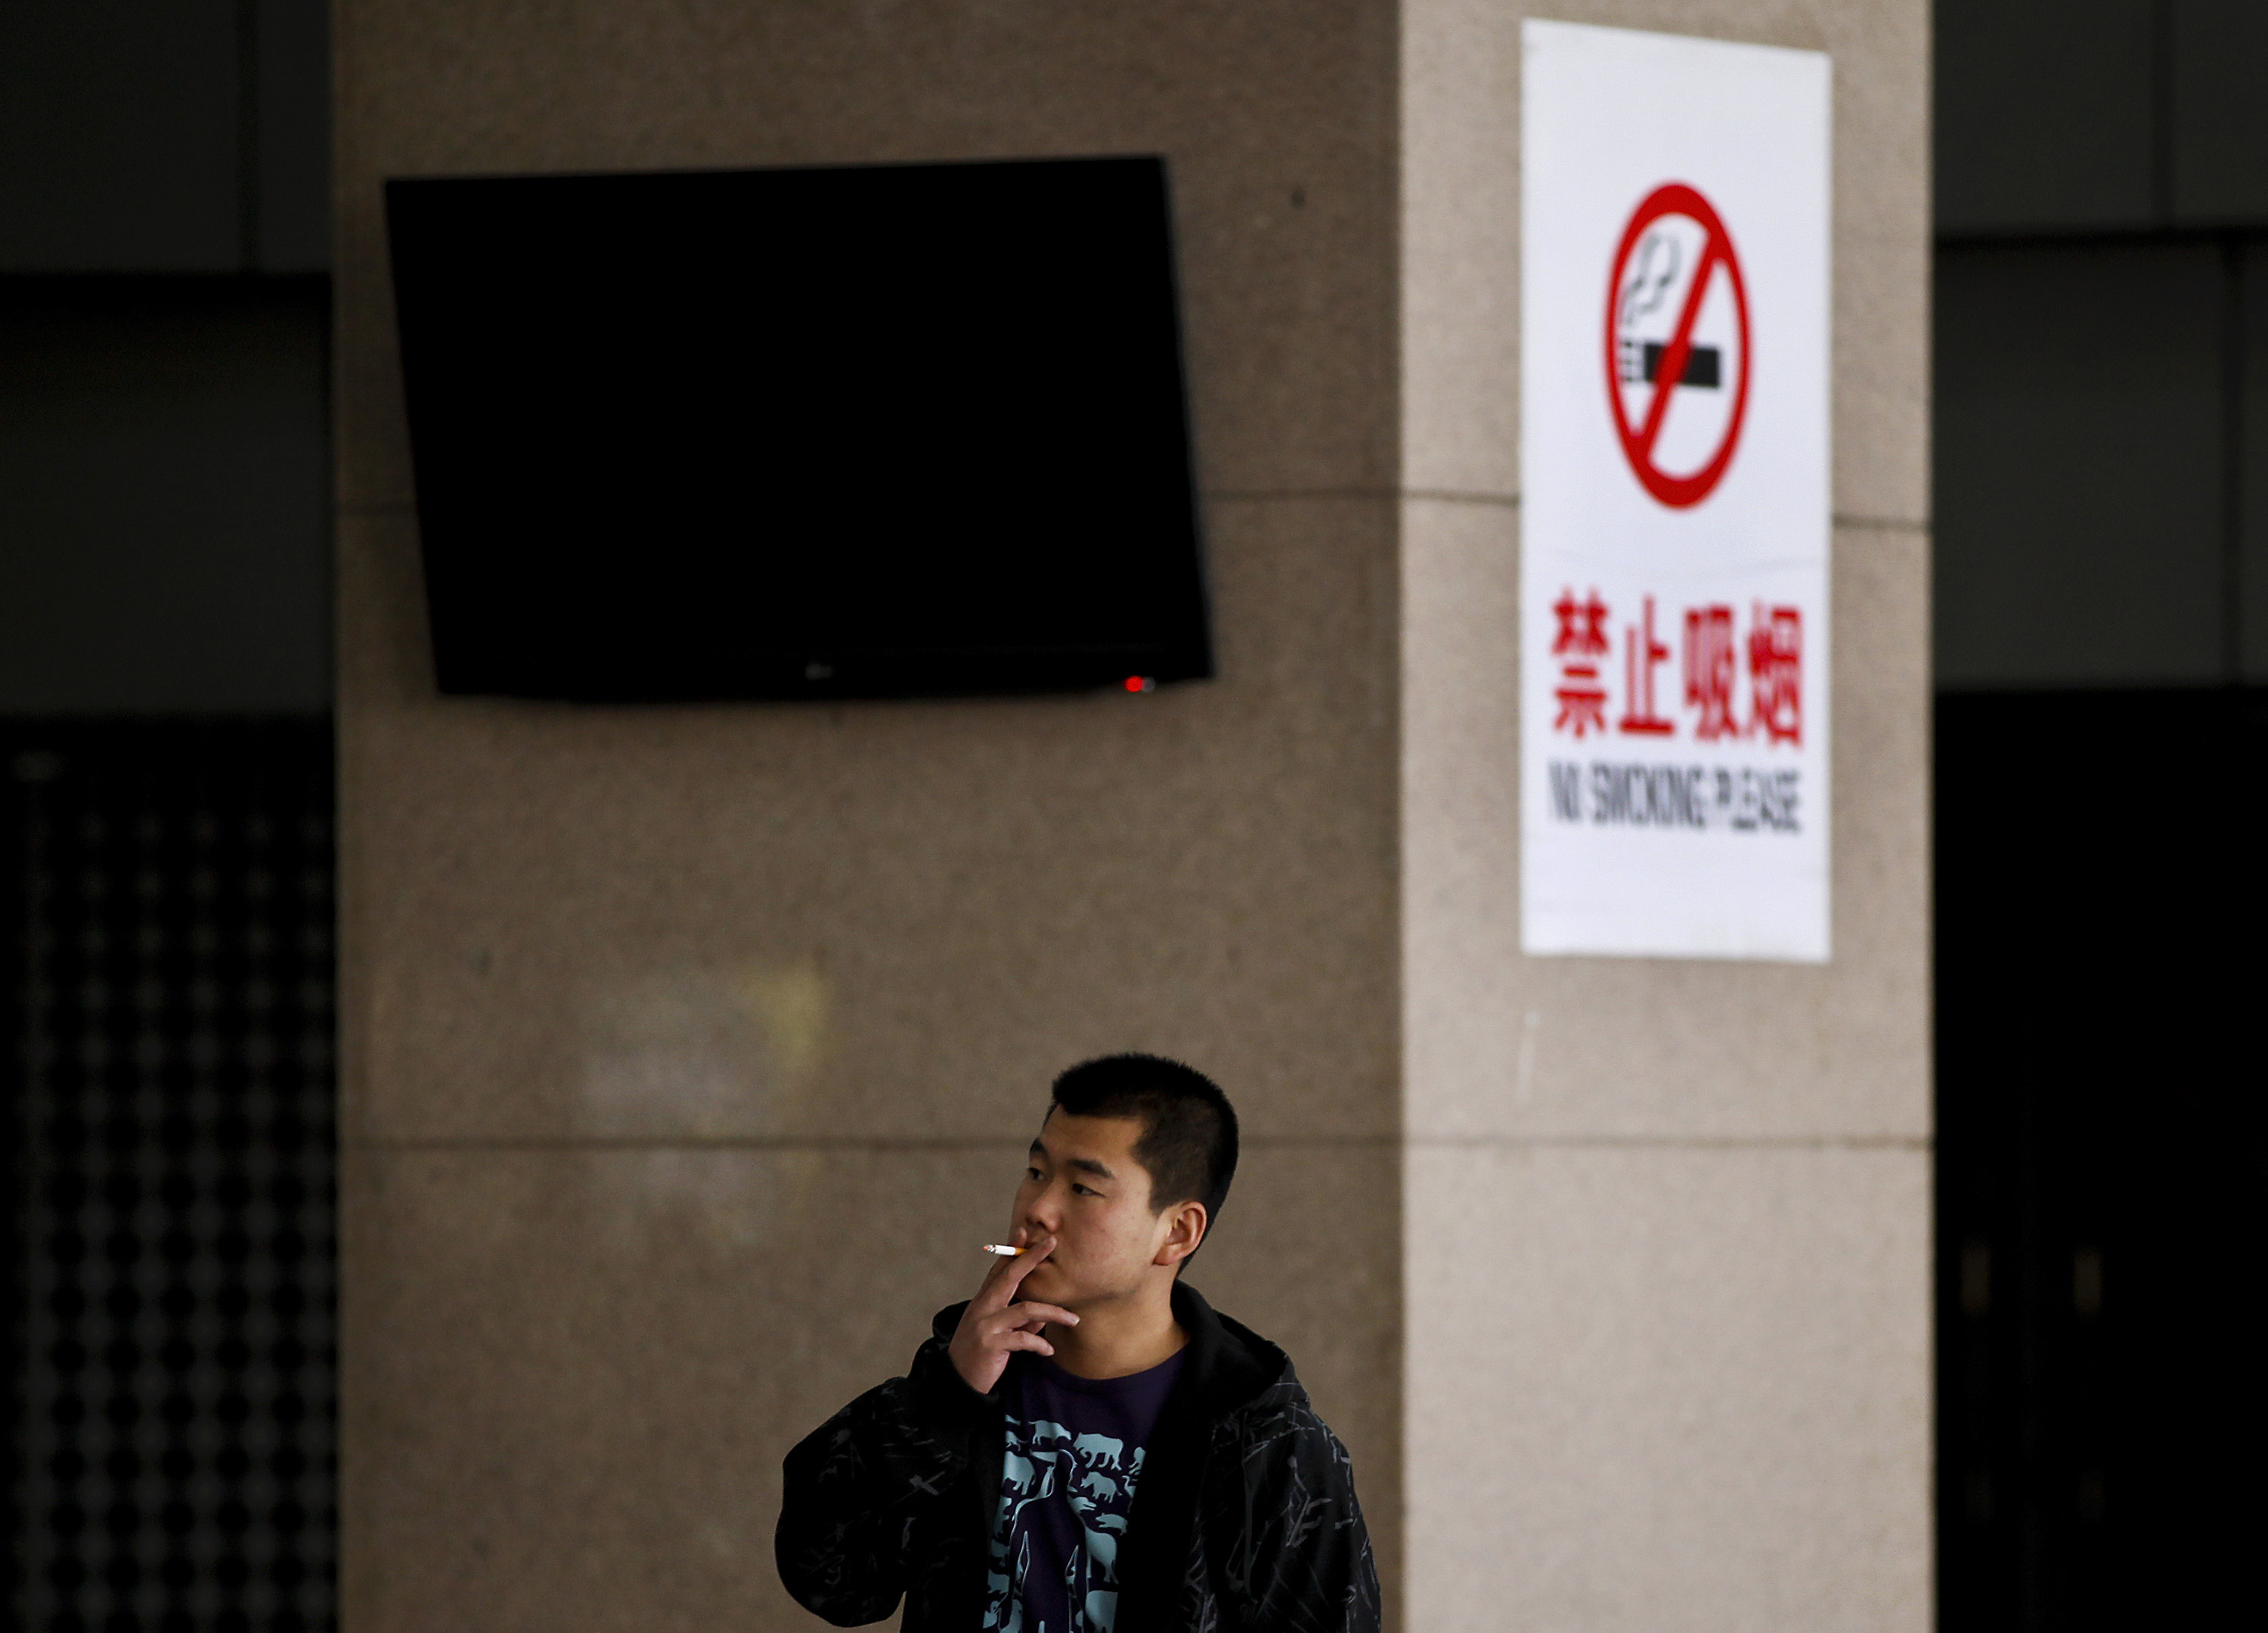 Tobak, Cigaretter, Kina, Cancer